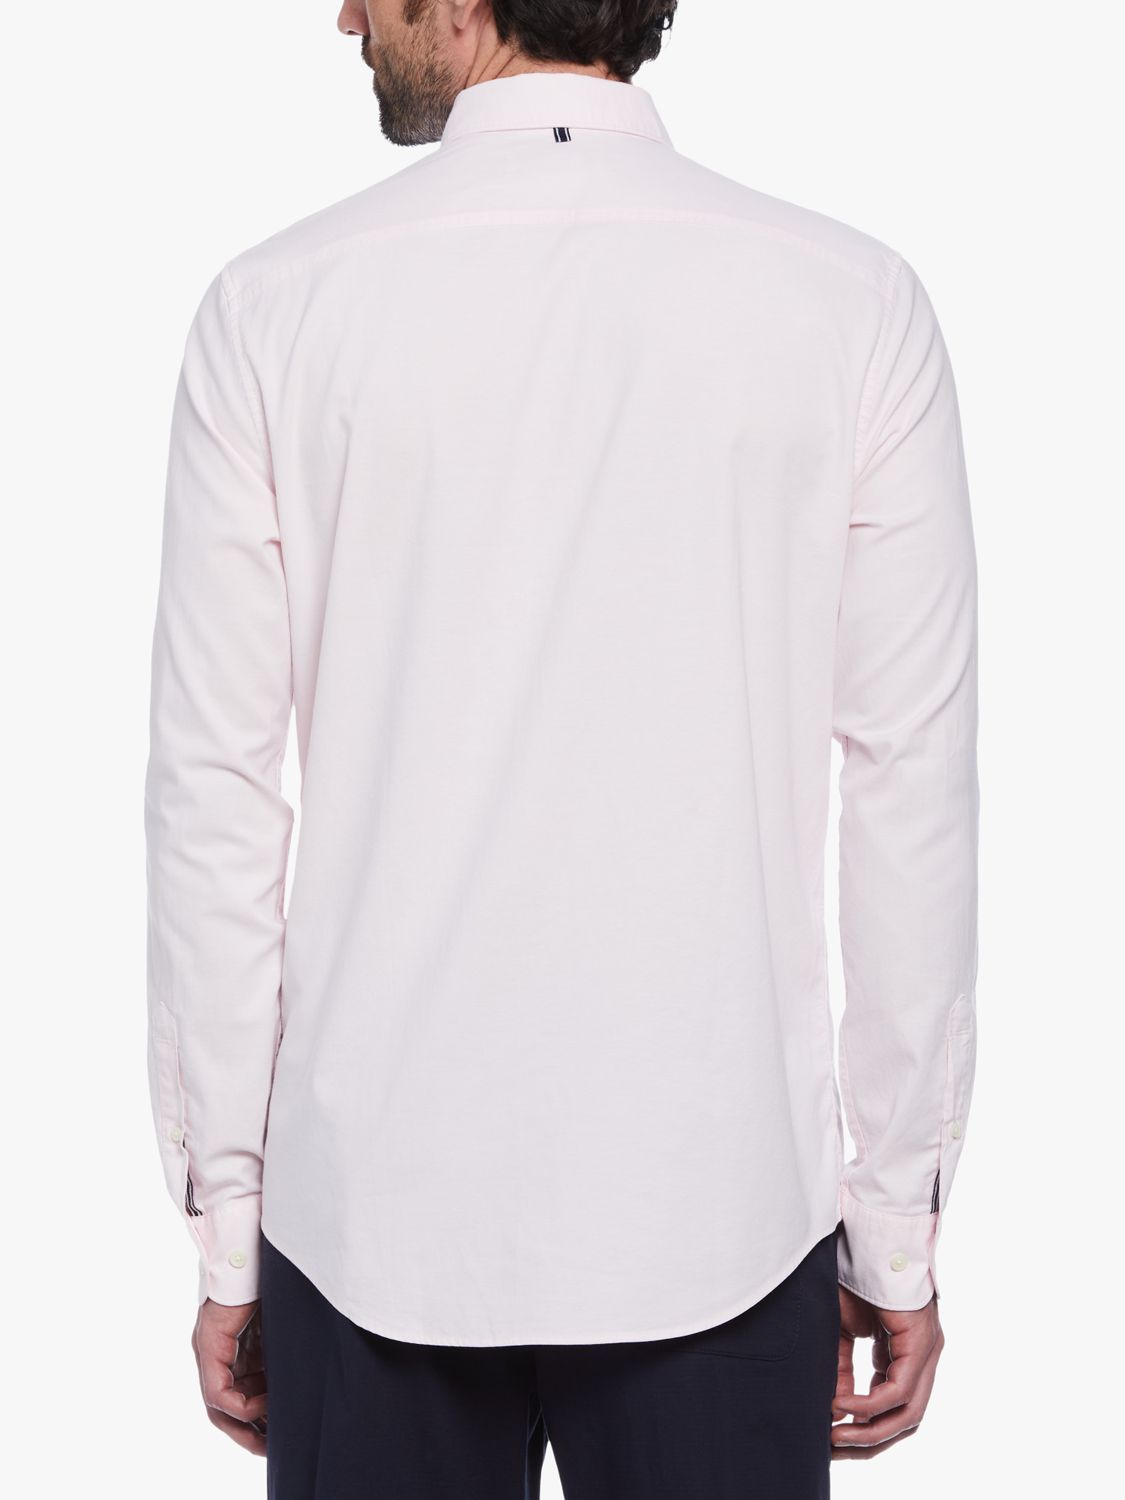 Original Penguin Long Sleeve Stretch Oxford Shirt, Pink, M